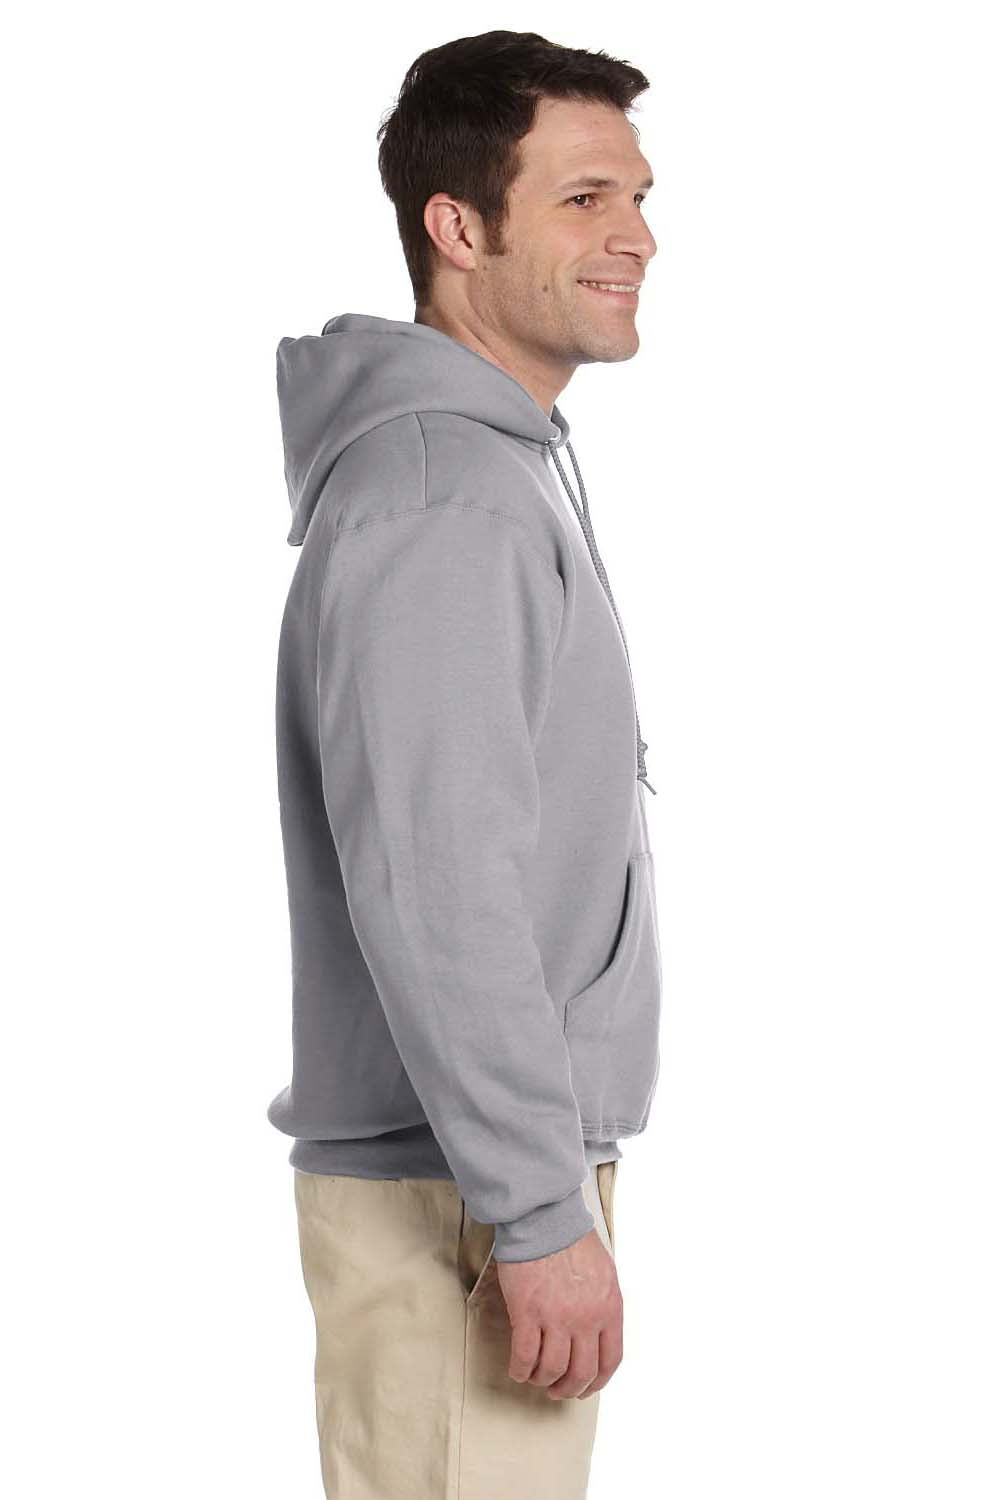 Jerzees 4997 Mens Super Sweats NuBlend Fleece Hooded Sweatshirt Hoodie Oxford Grey Side